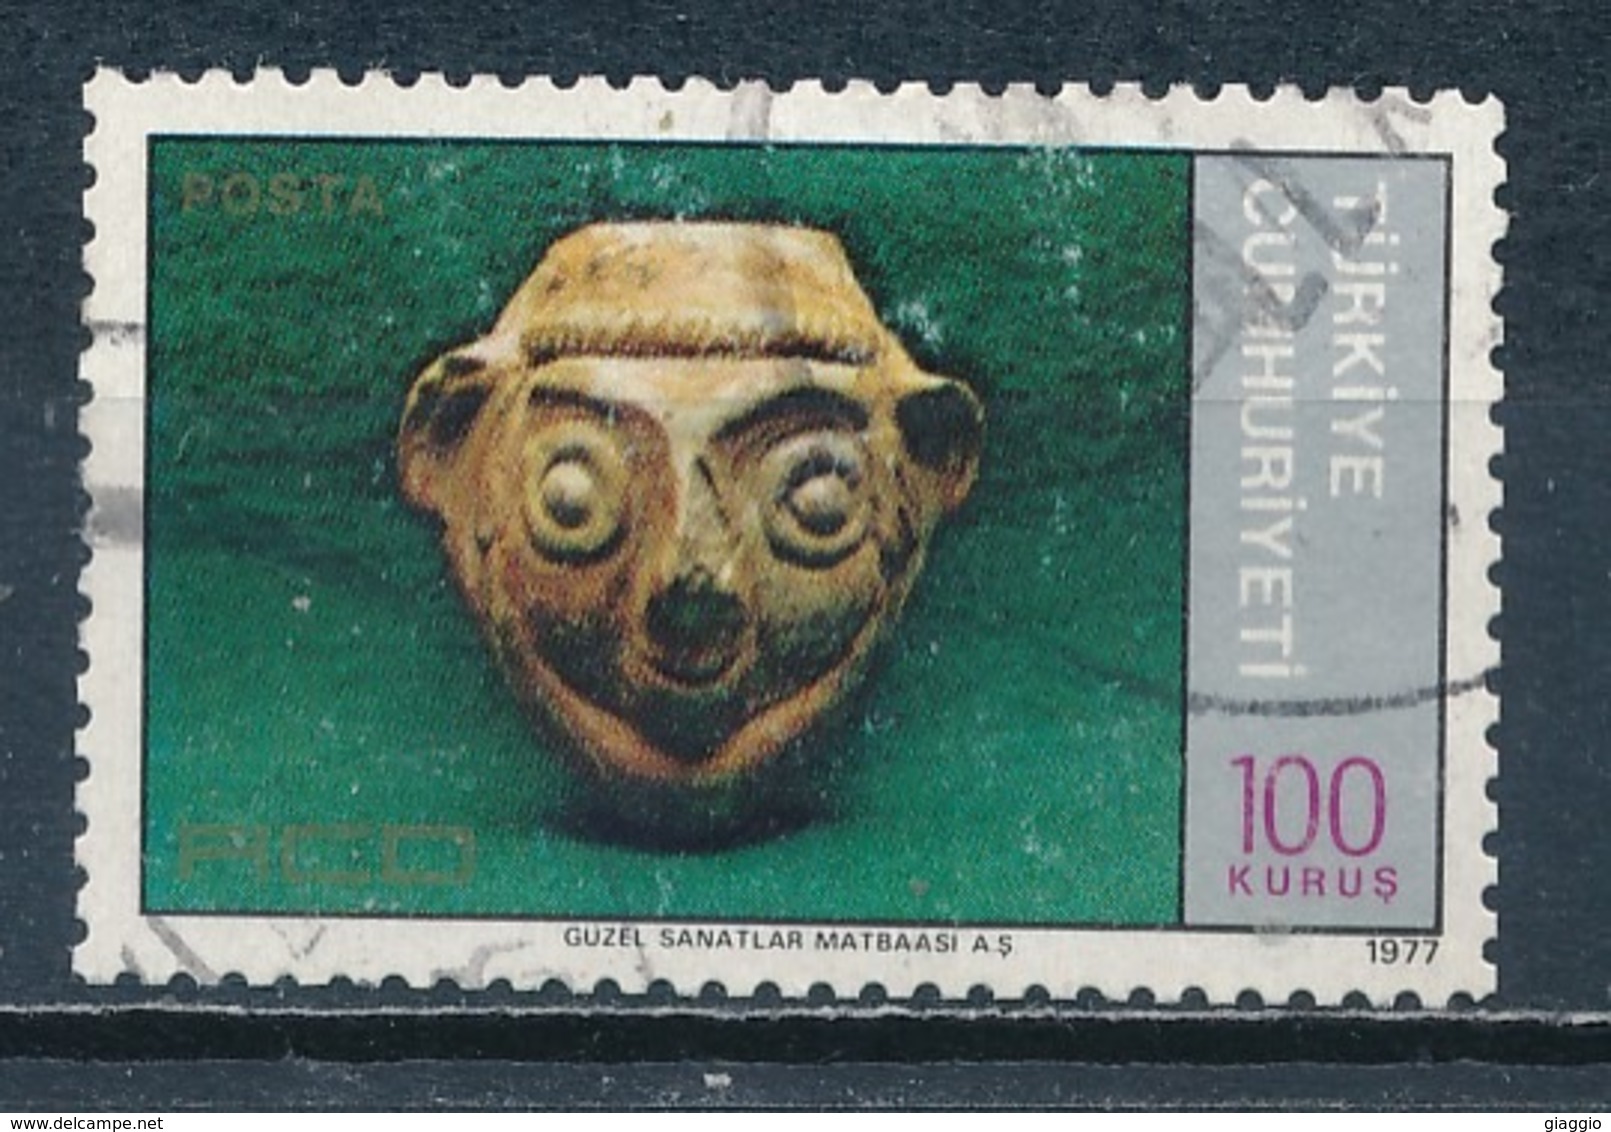 °°° TURCHIA TURKEY - Y&T N°2191 - 1977 °°° - Used Stamps